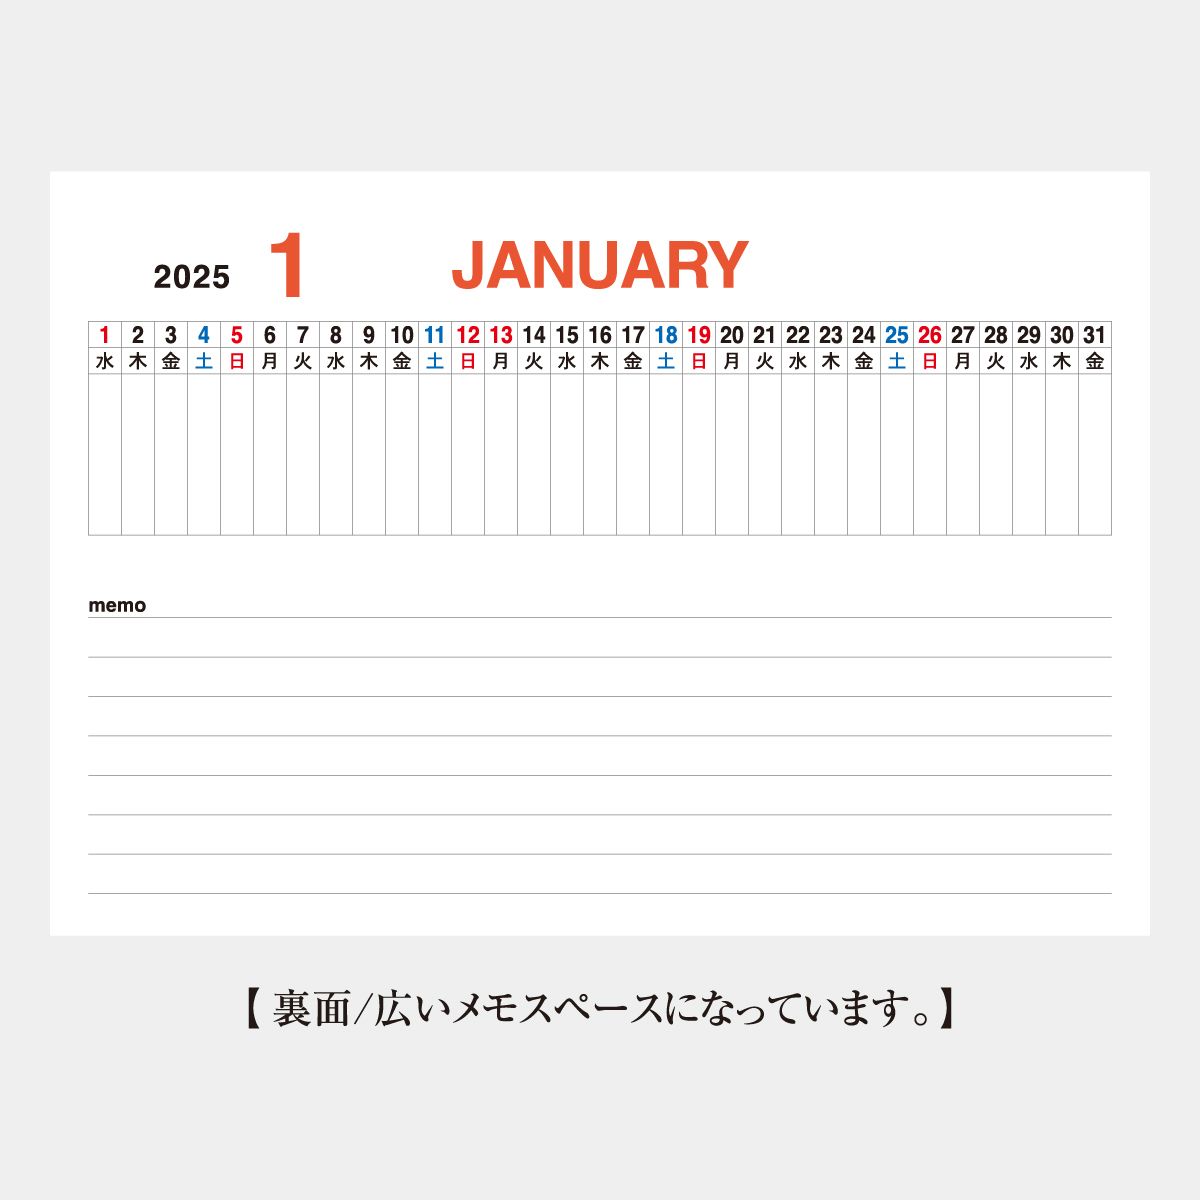 Fu 49 書き込みスケジュール 23年版の名入れカレンダーを格安で販売 名入れカレンダー印刷 Com